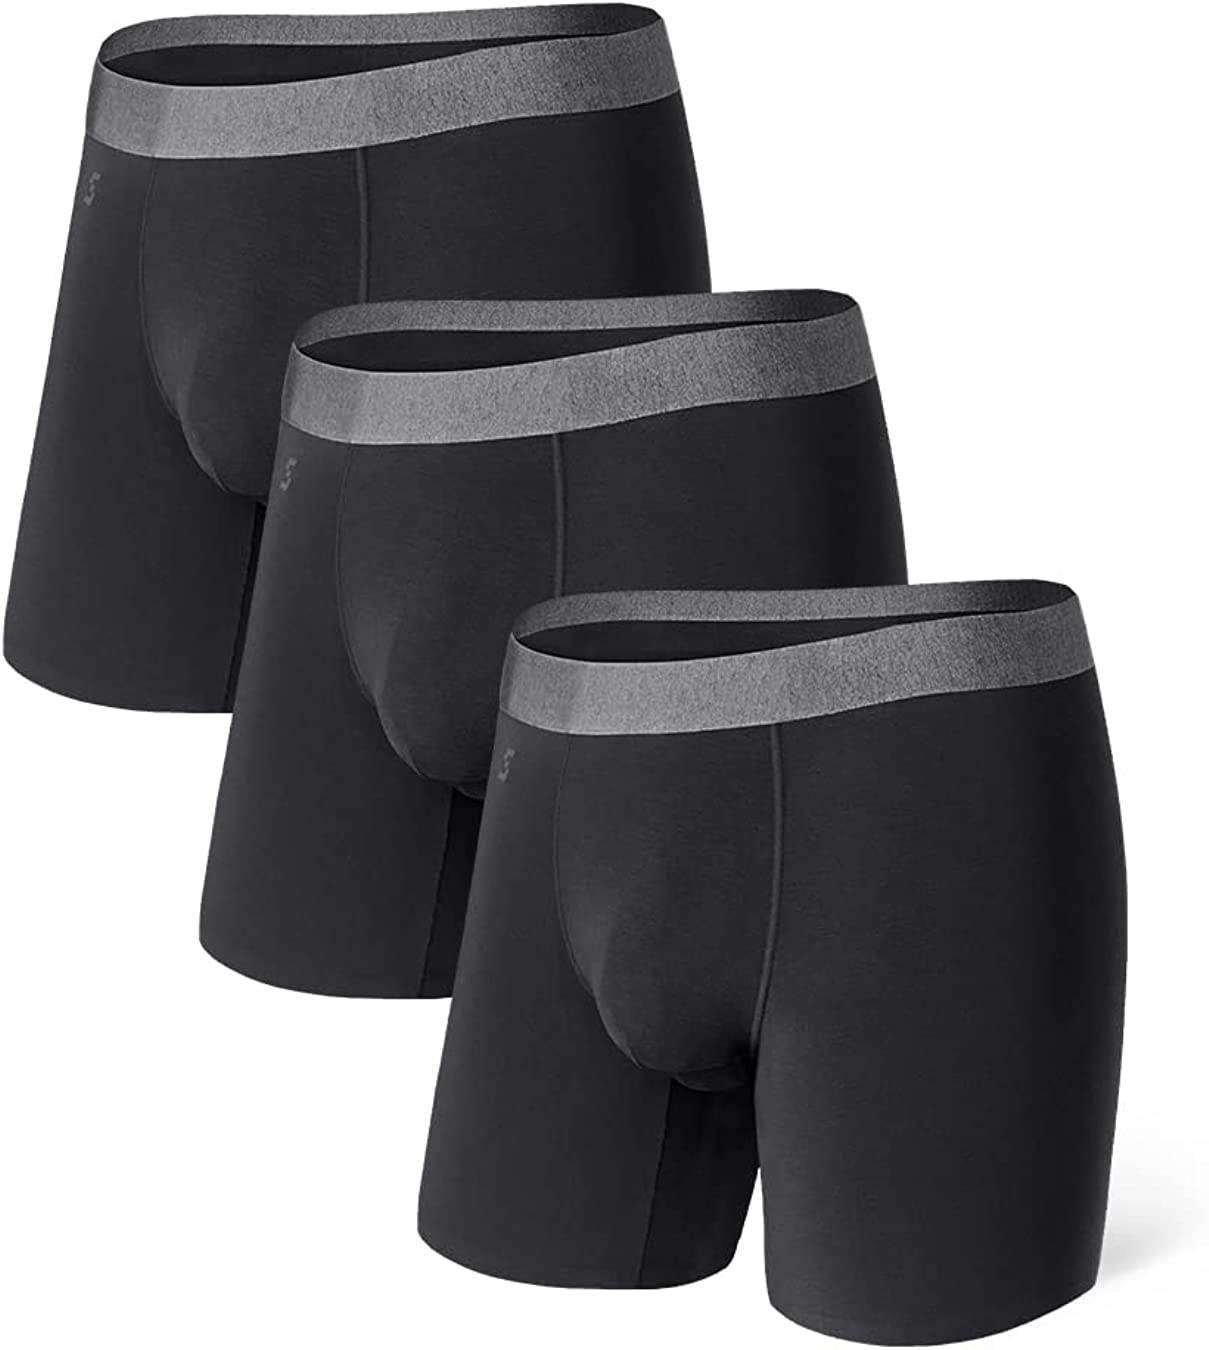  Separatec Mens Underwear Comfortable Soft Bamboo